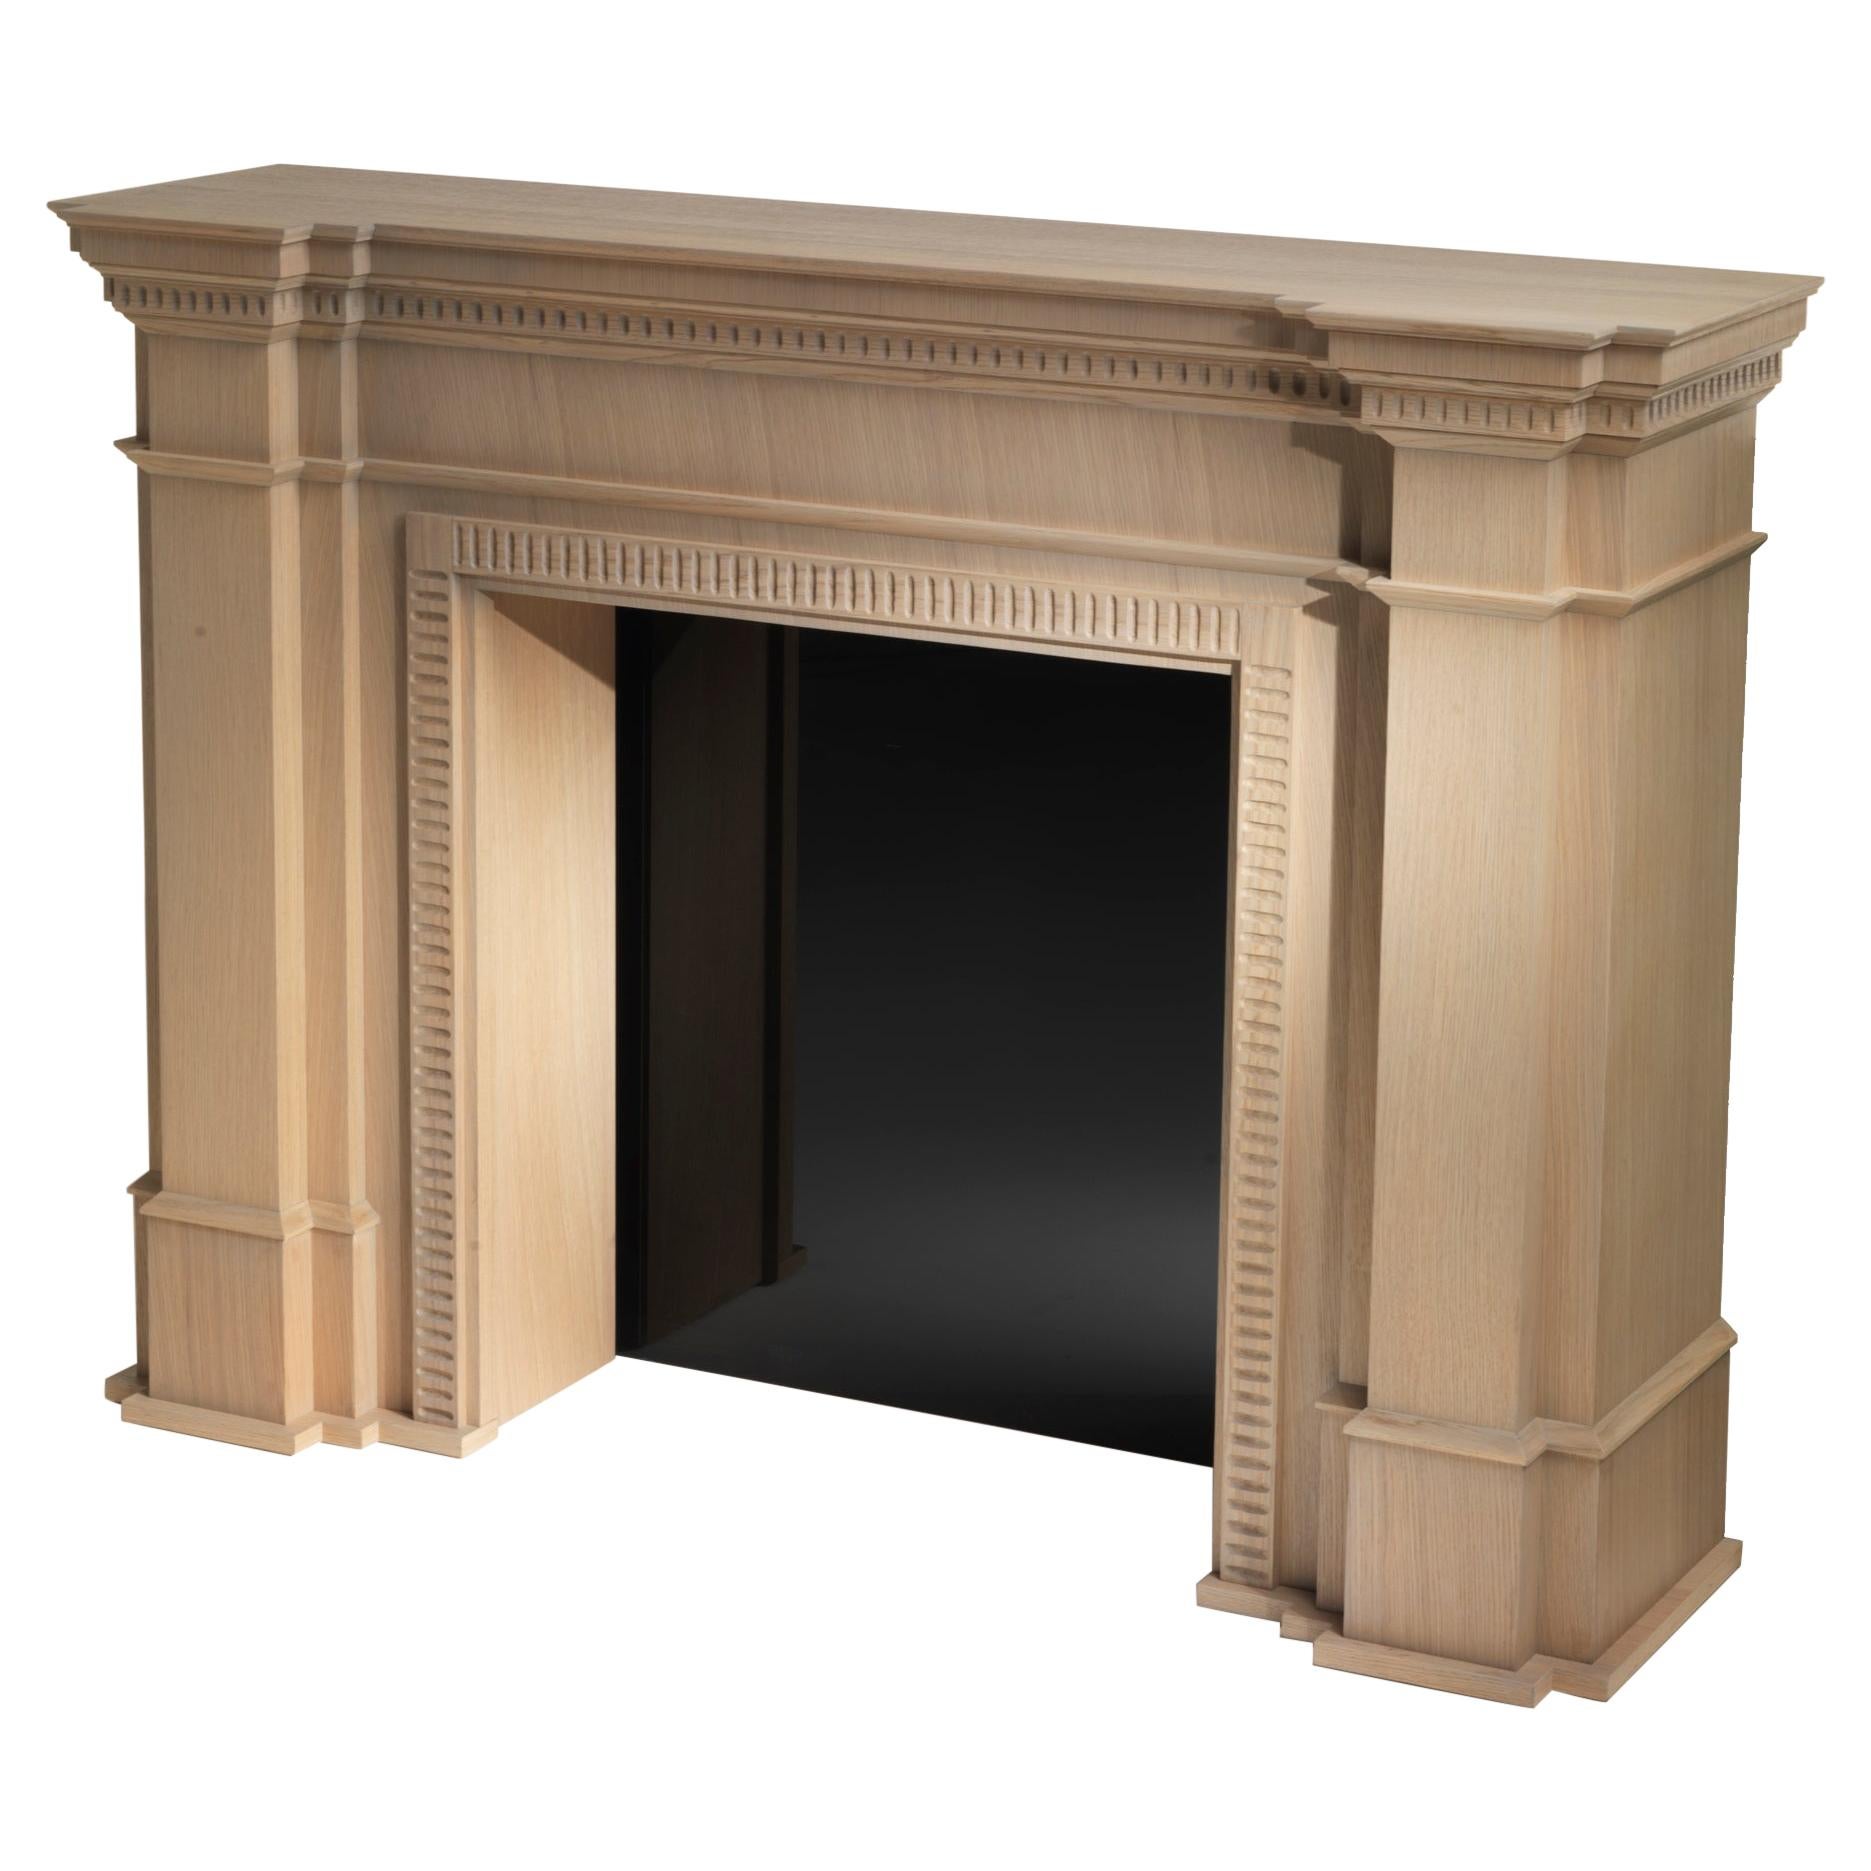 KEDDLESTON ANTIK Wooden Fireplace with Mirror Back in Solid Oak by Piero Manara